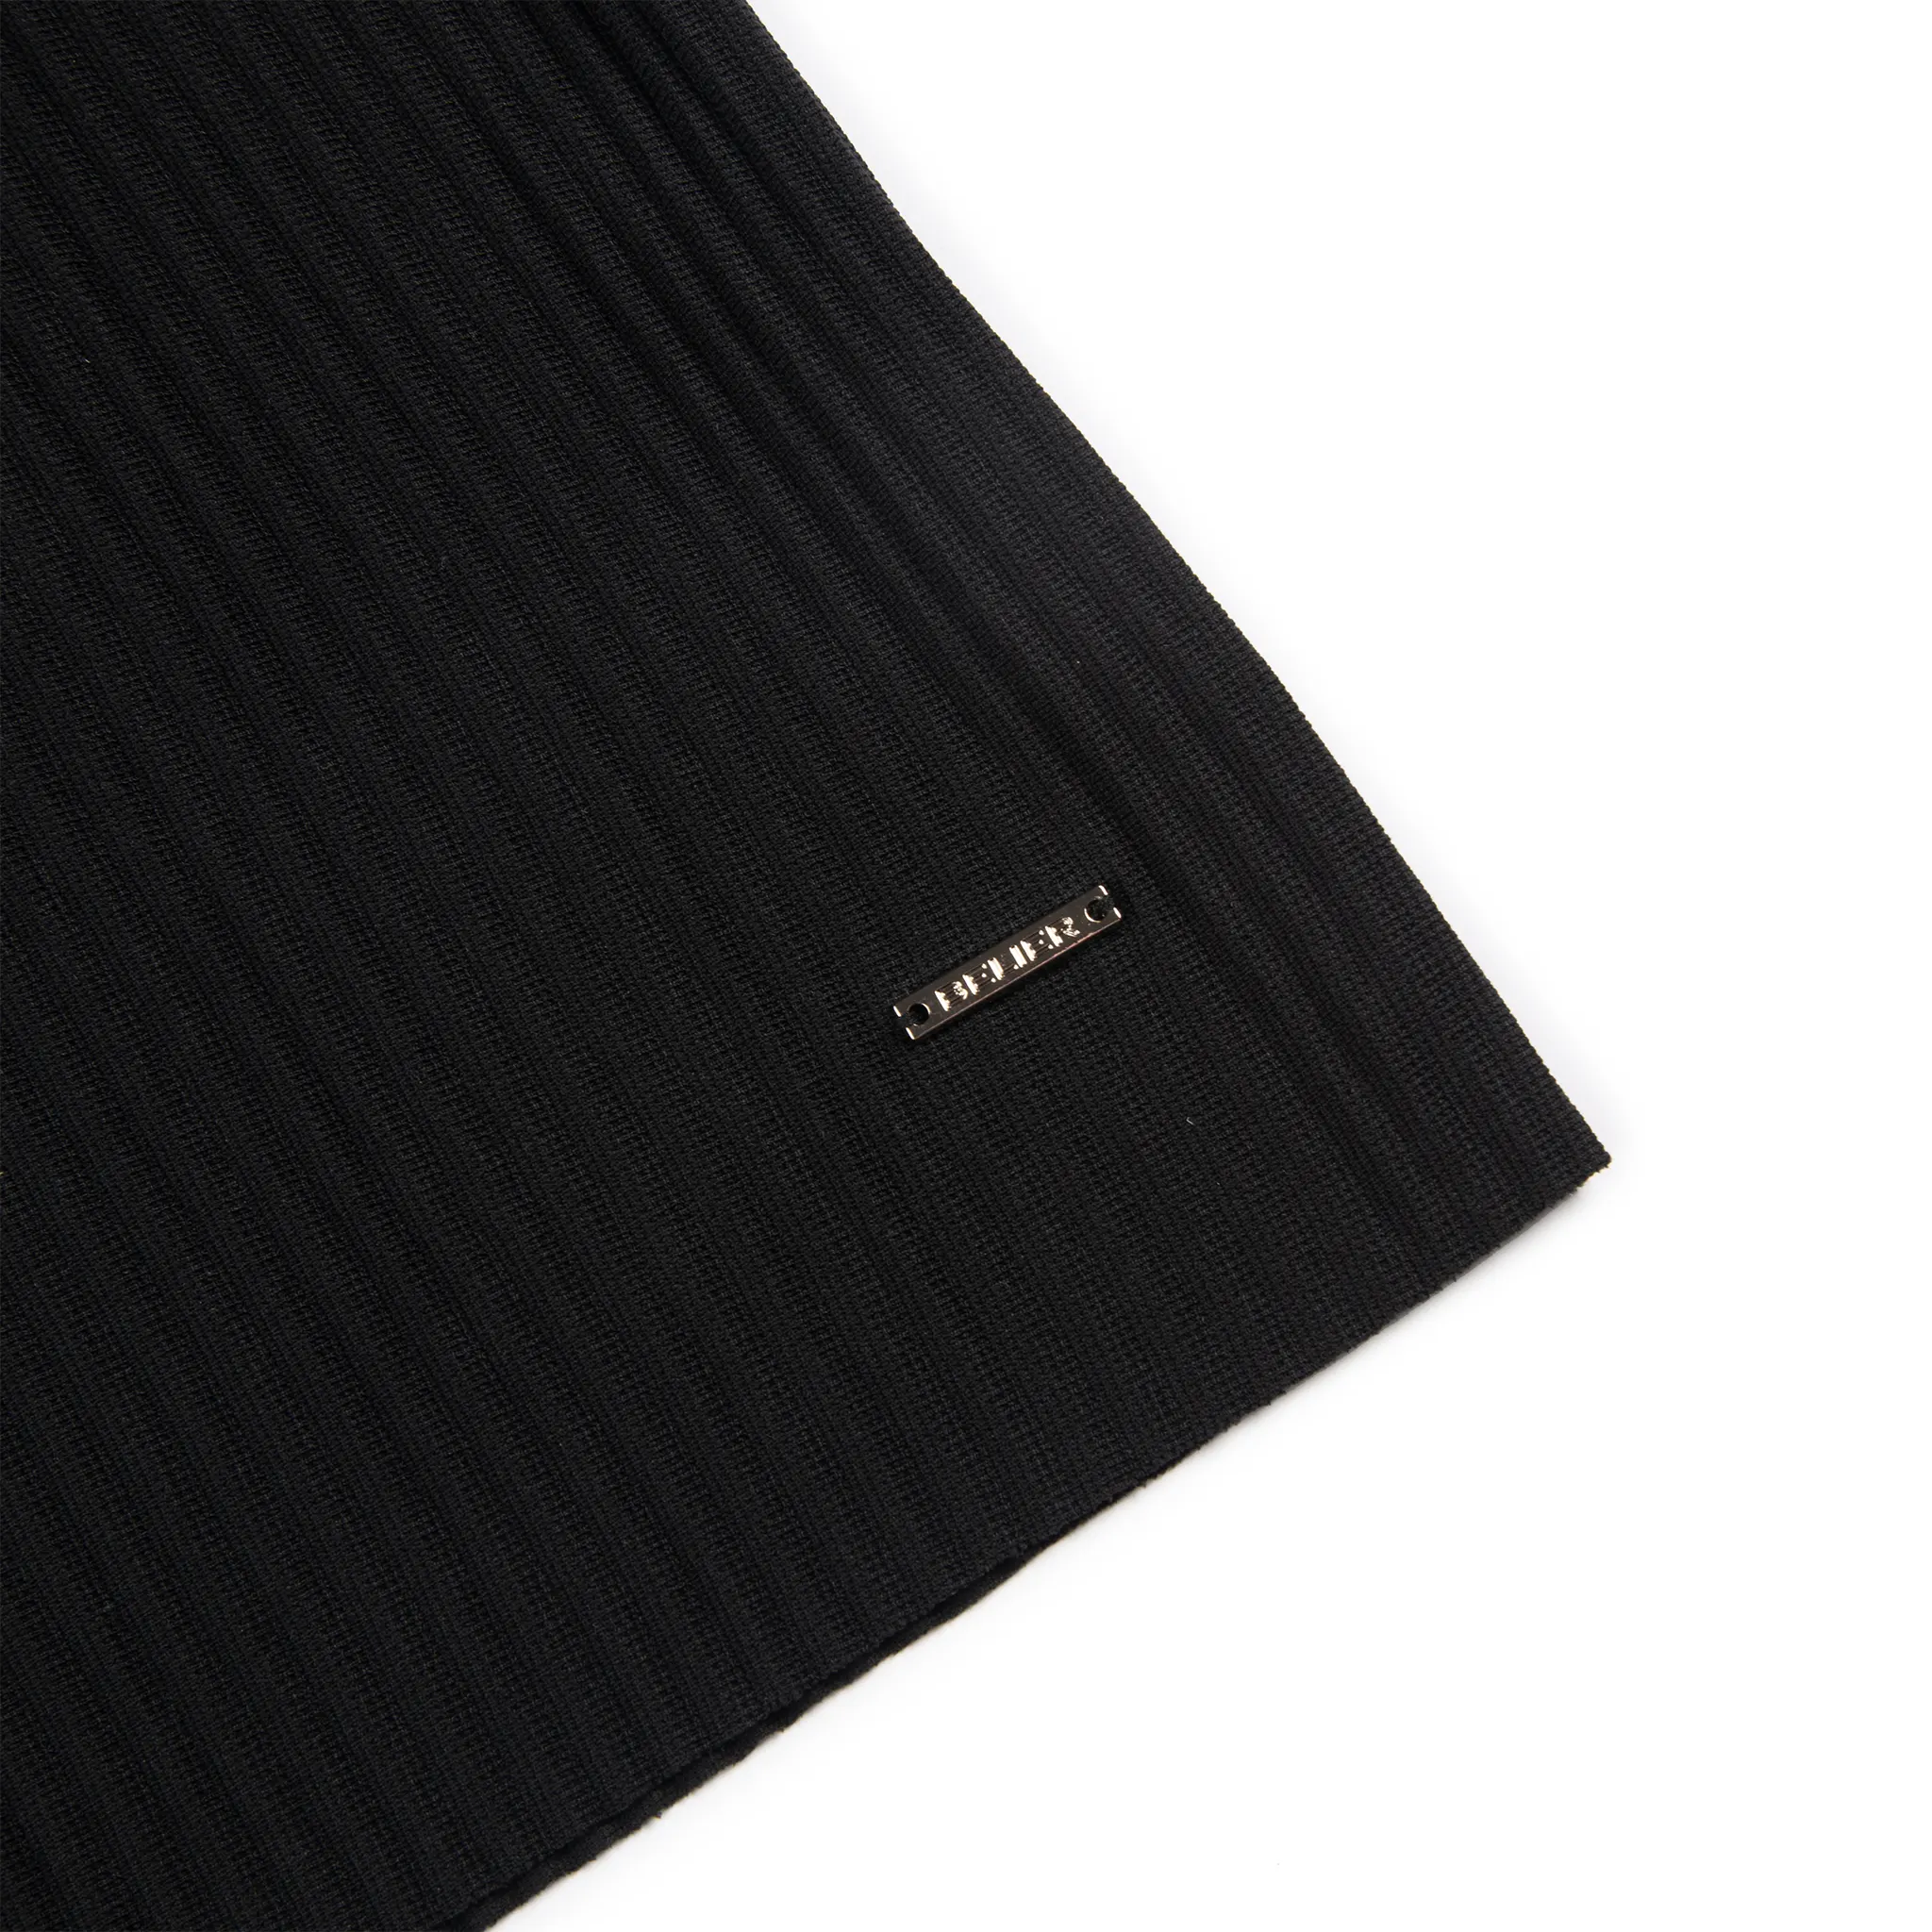 Detail view of Belier Pleated Short Sleeve Black Resort Shirt BM-073